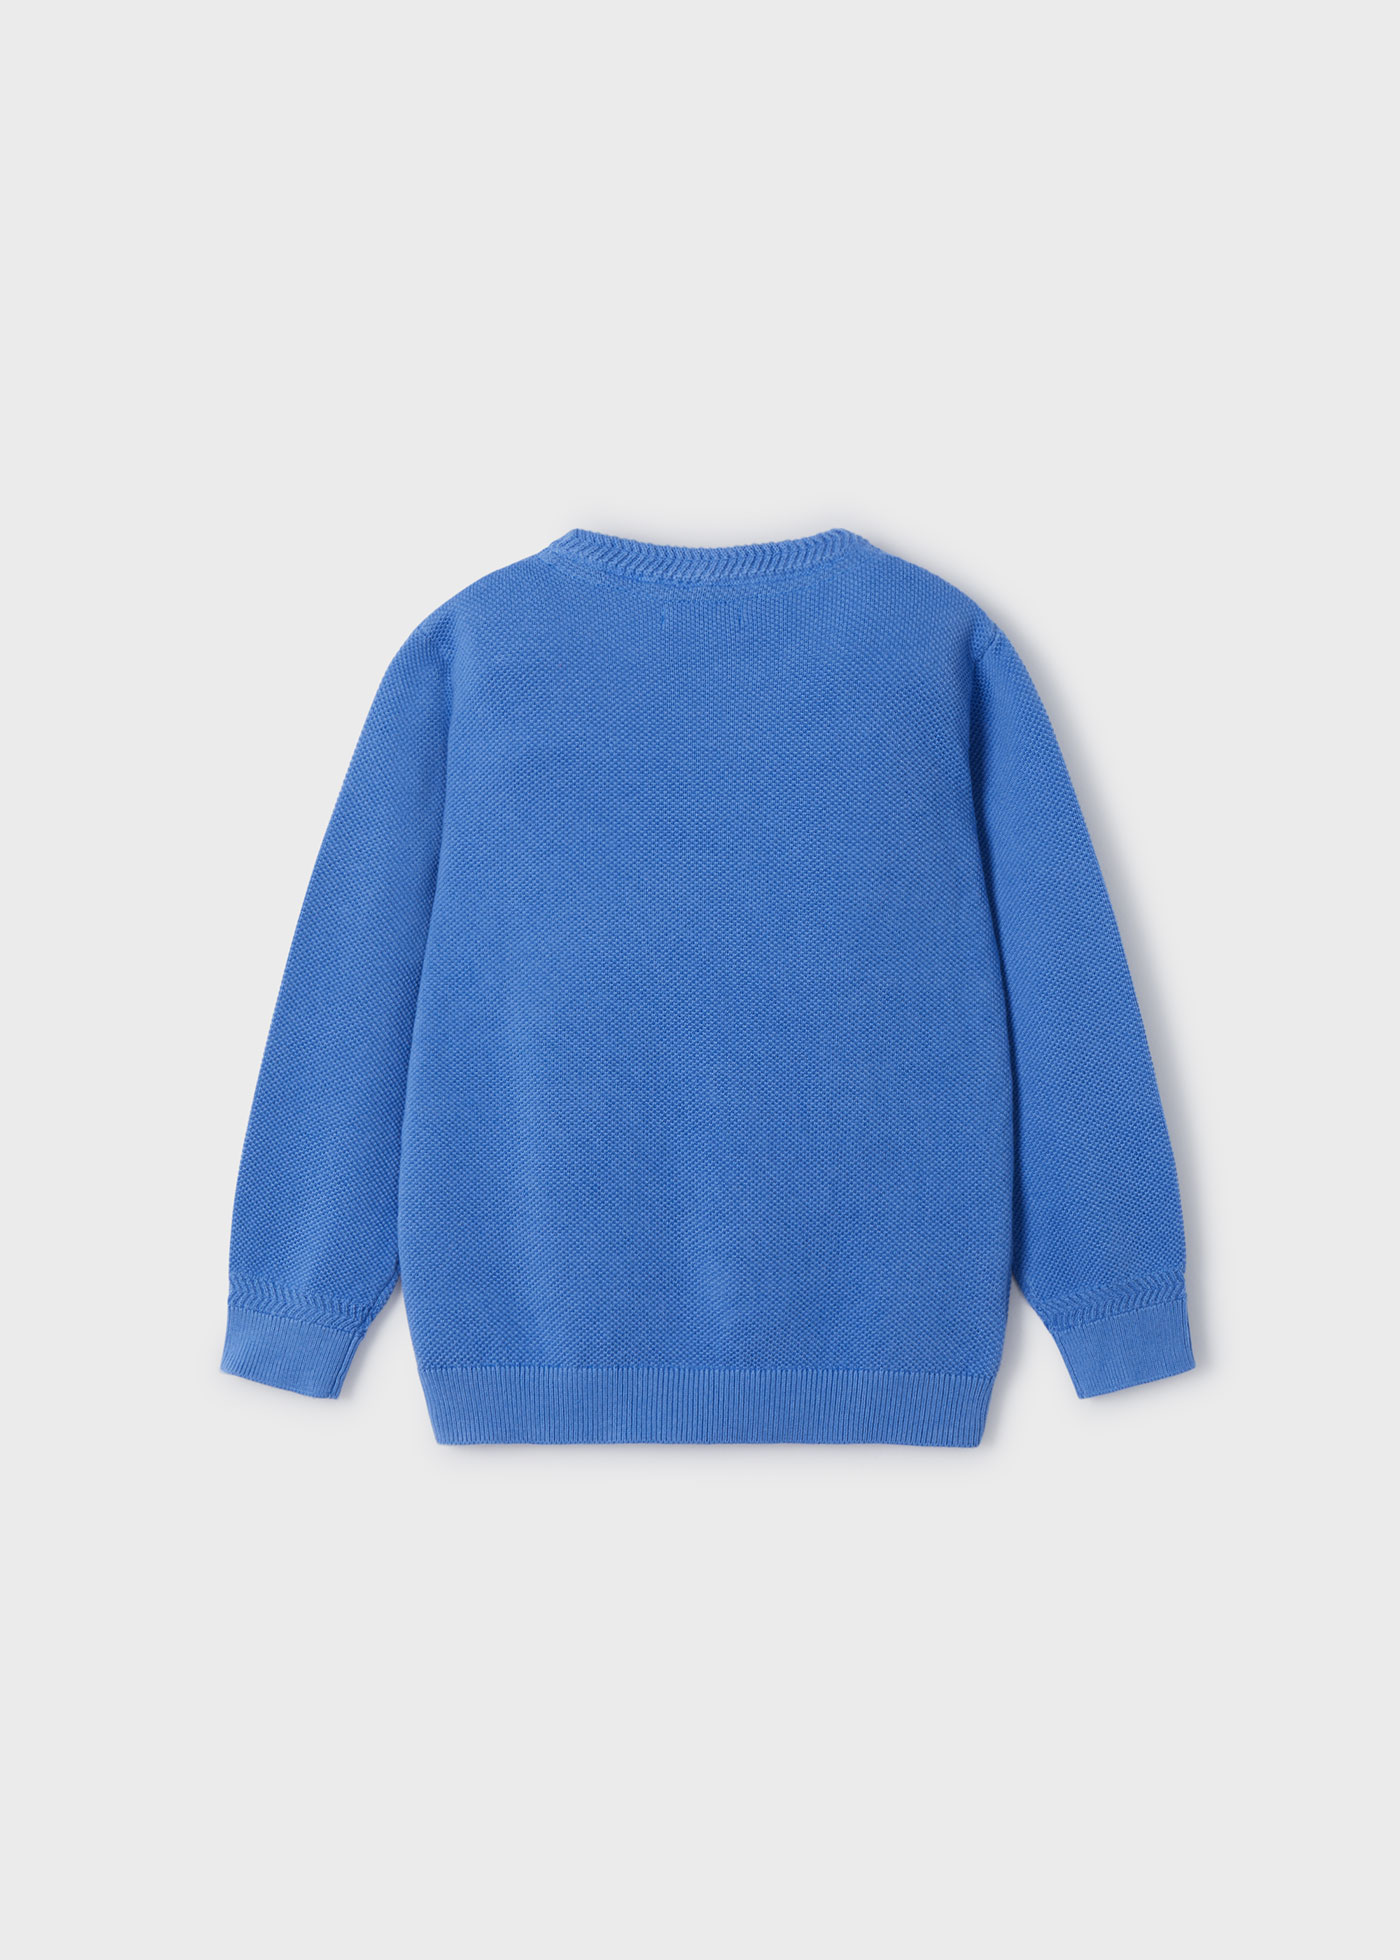 Пуловер Better Cotton със структура за момче